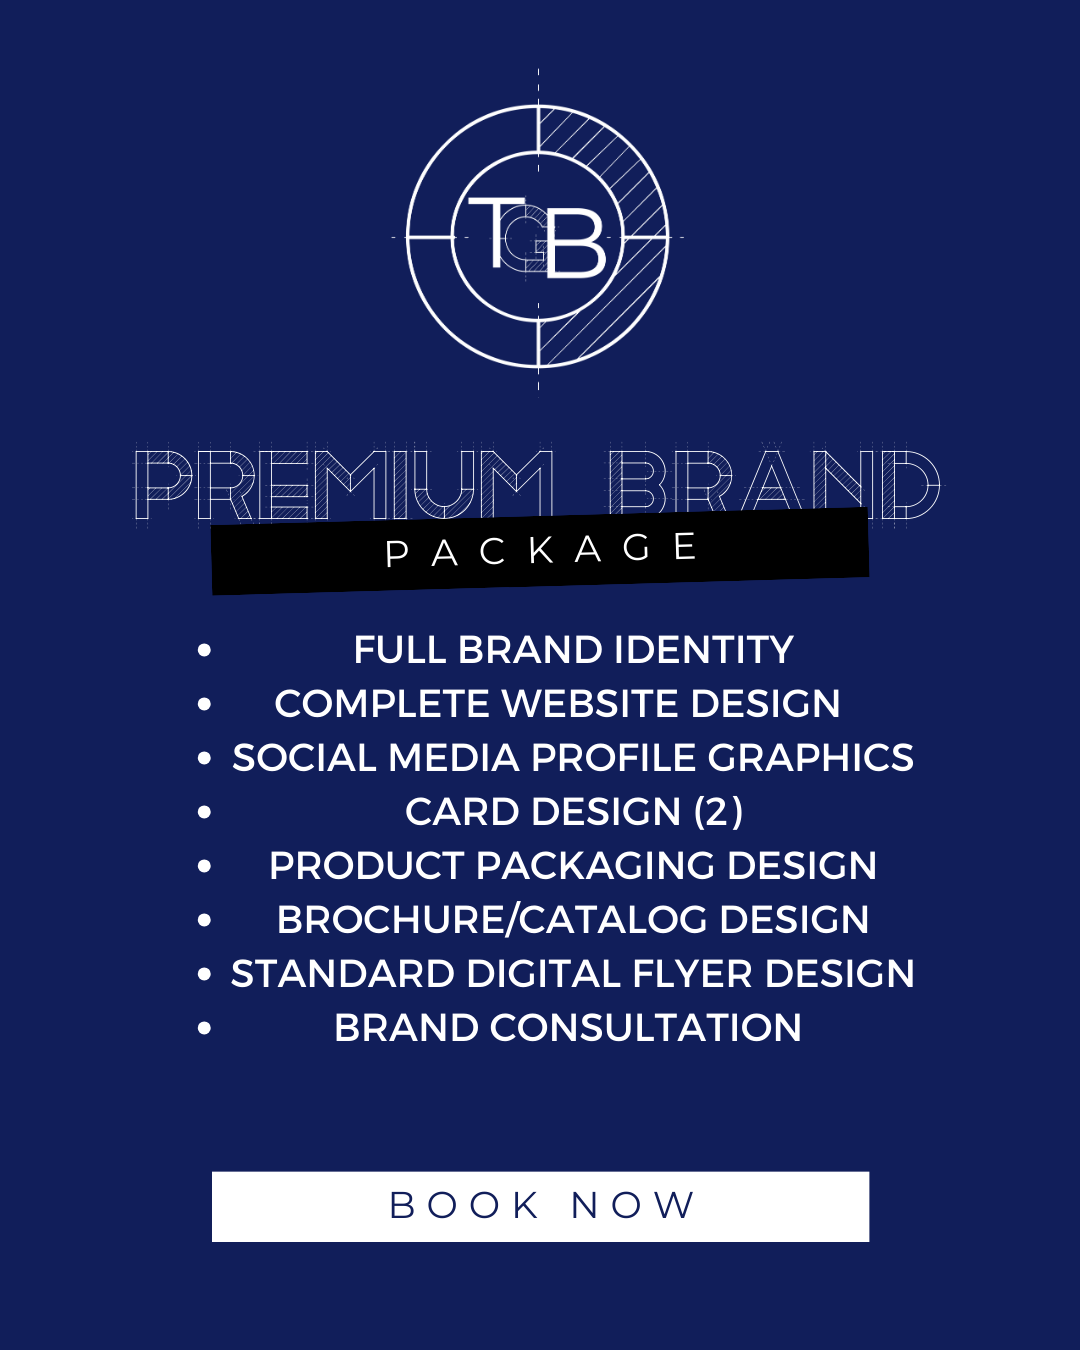 Premium Brand Package